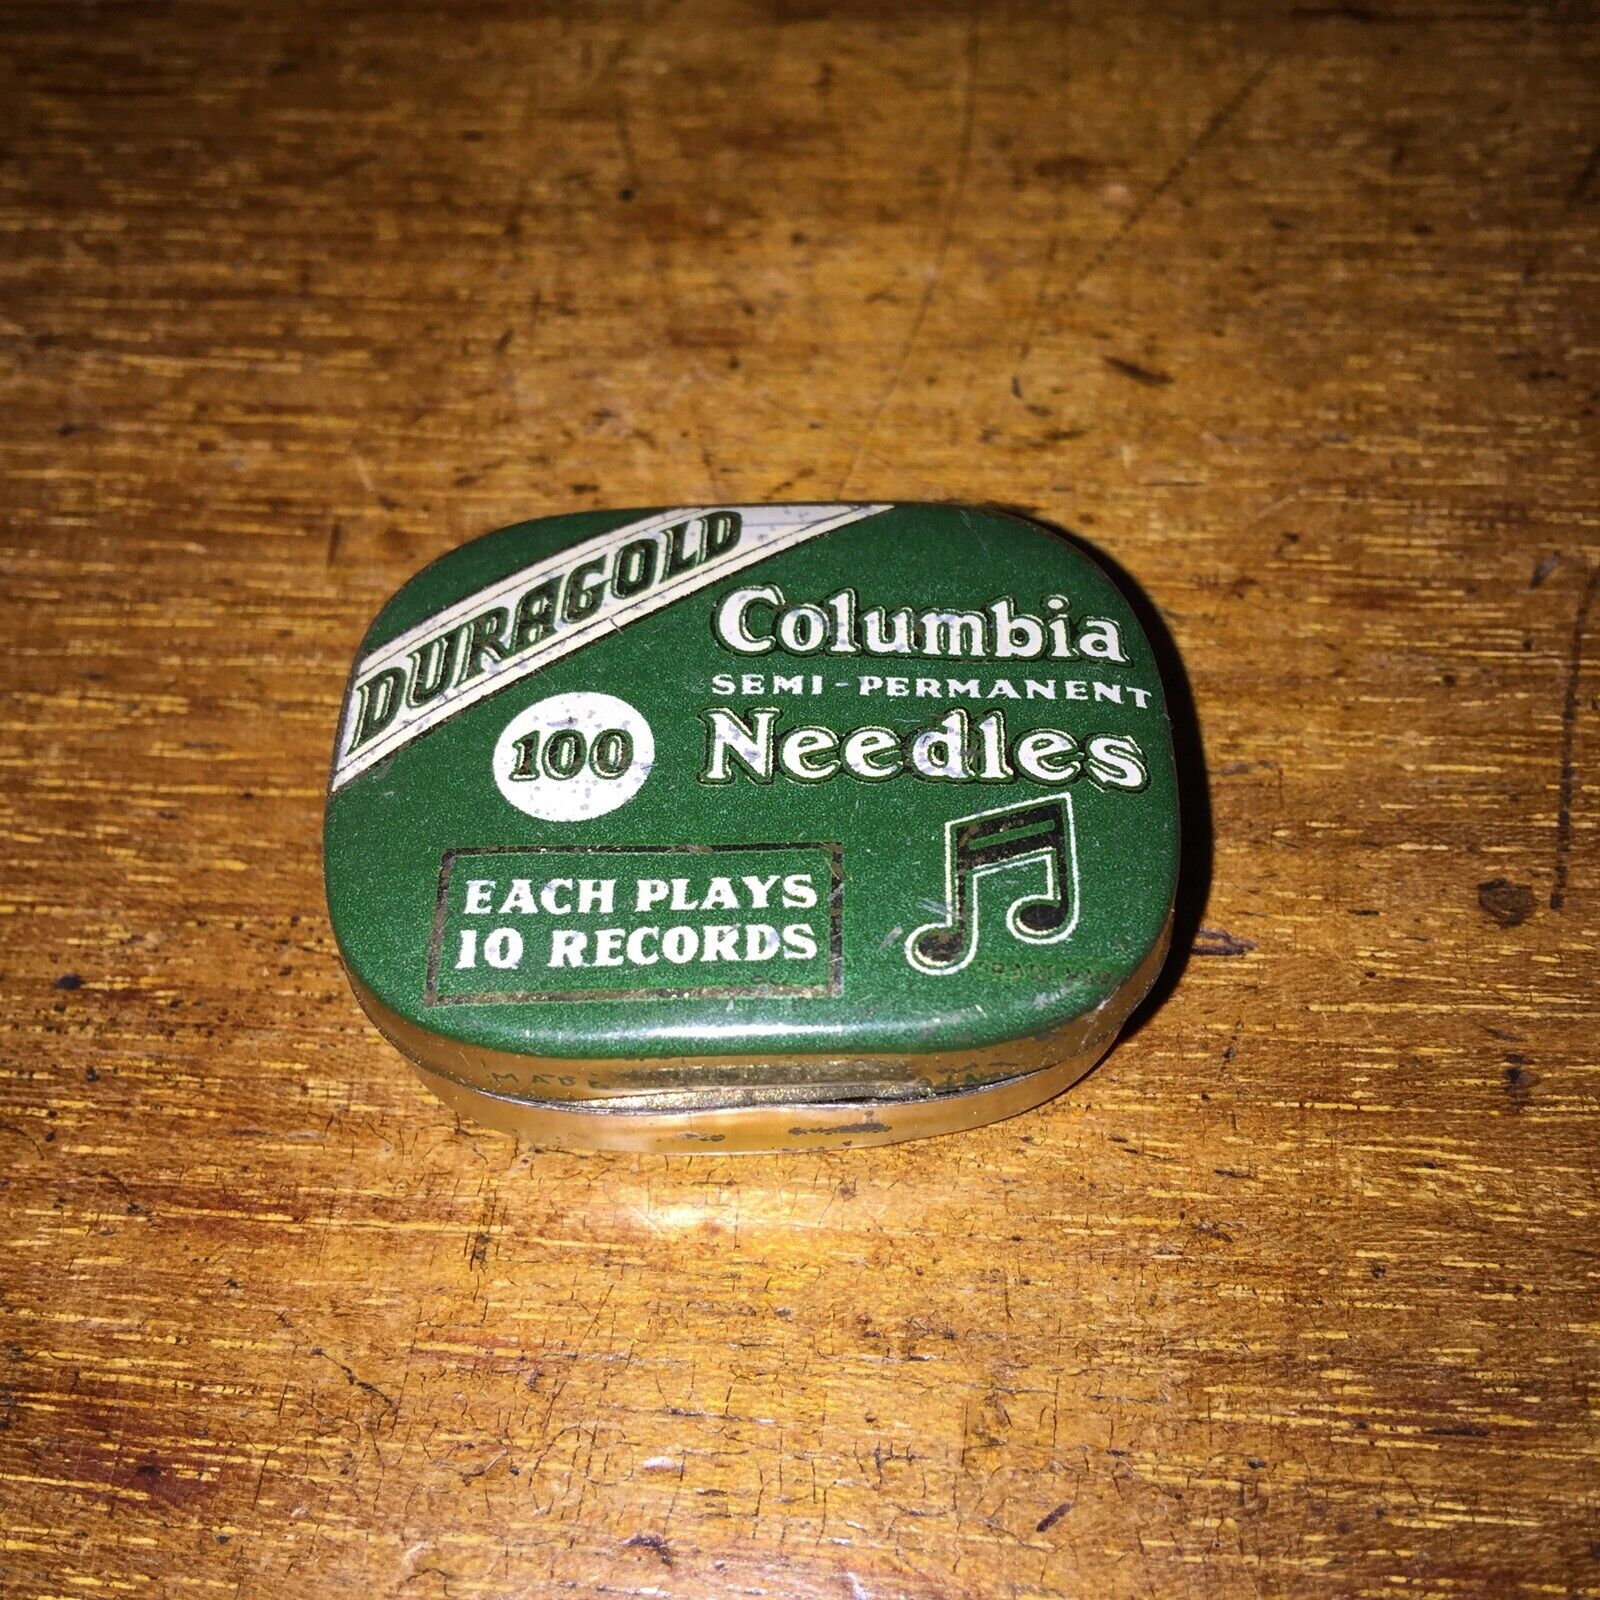 Vintage Antique Duragold Columbia Semi Permanent Needle Tin + Needles